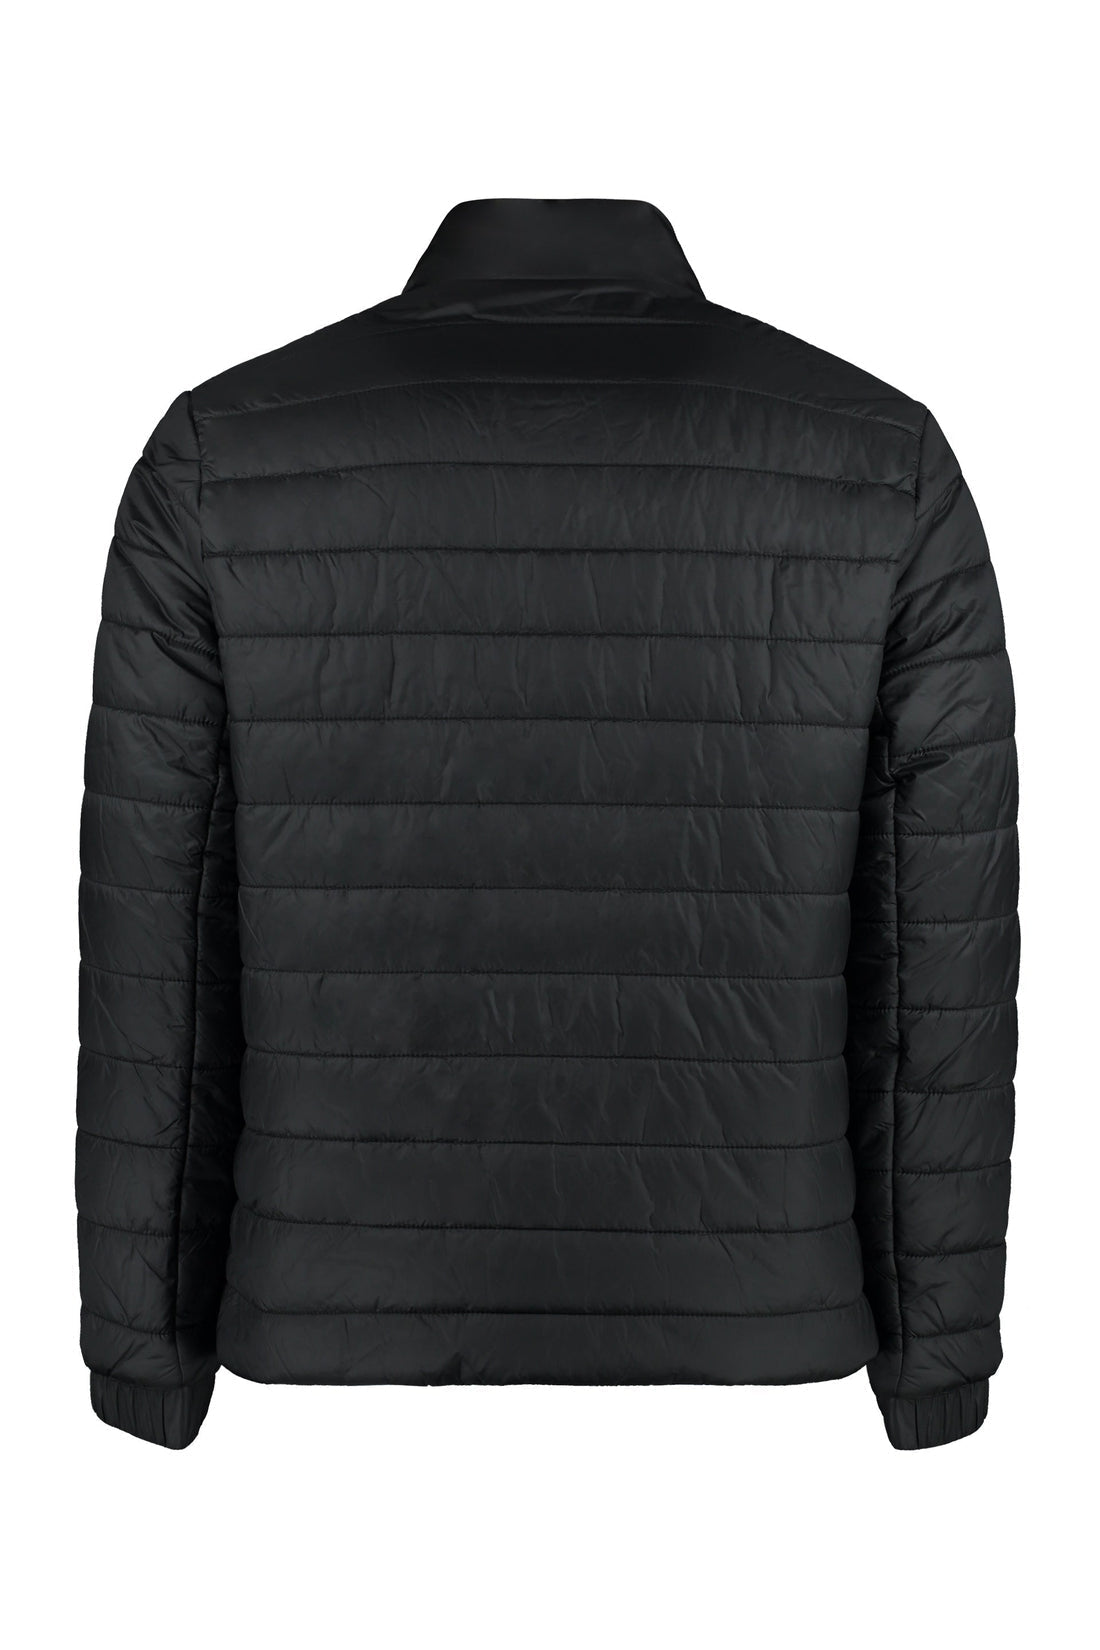 BOSS-OUTLET-SALE-Full zip down jacket-ARCHIVIST